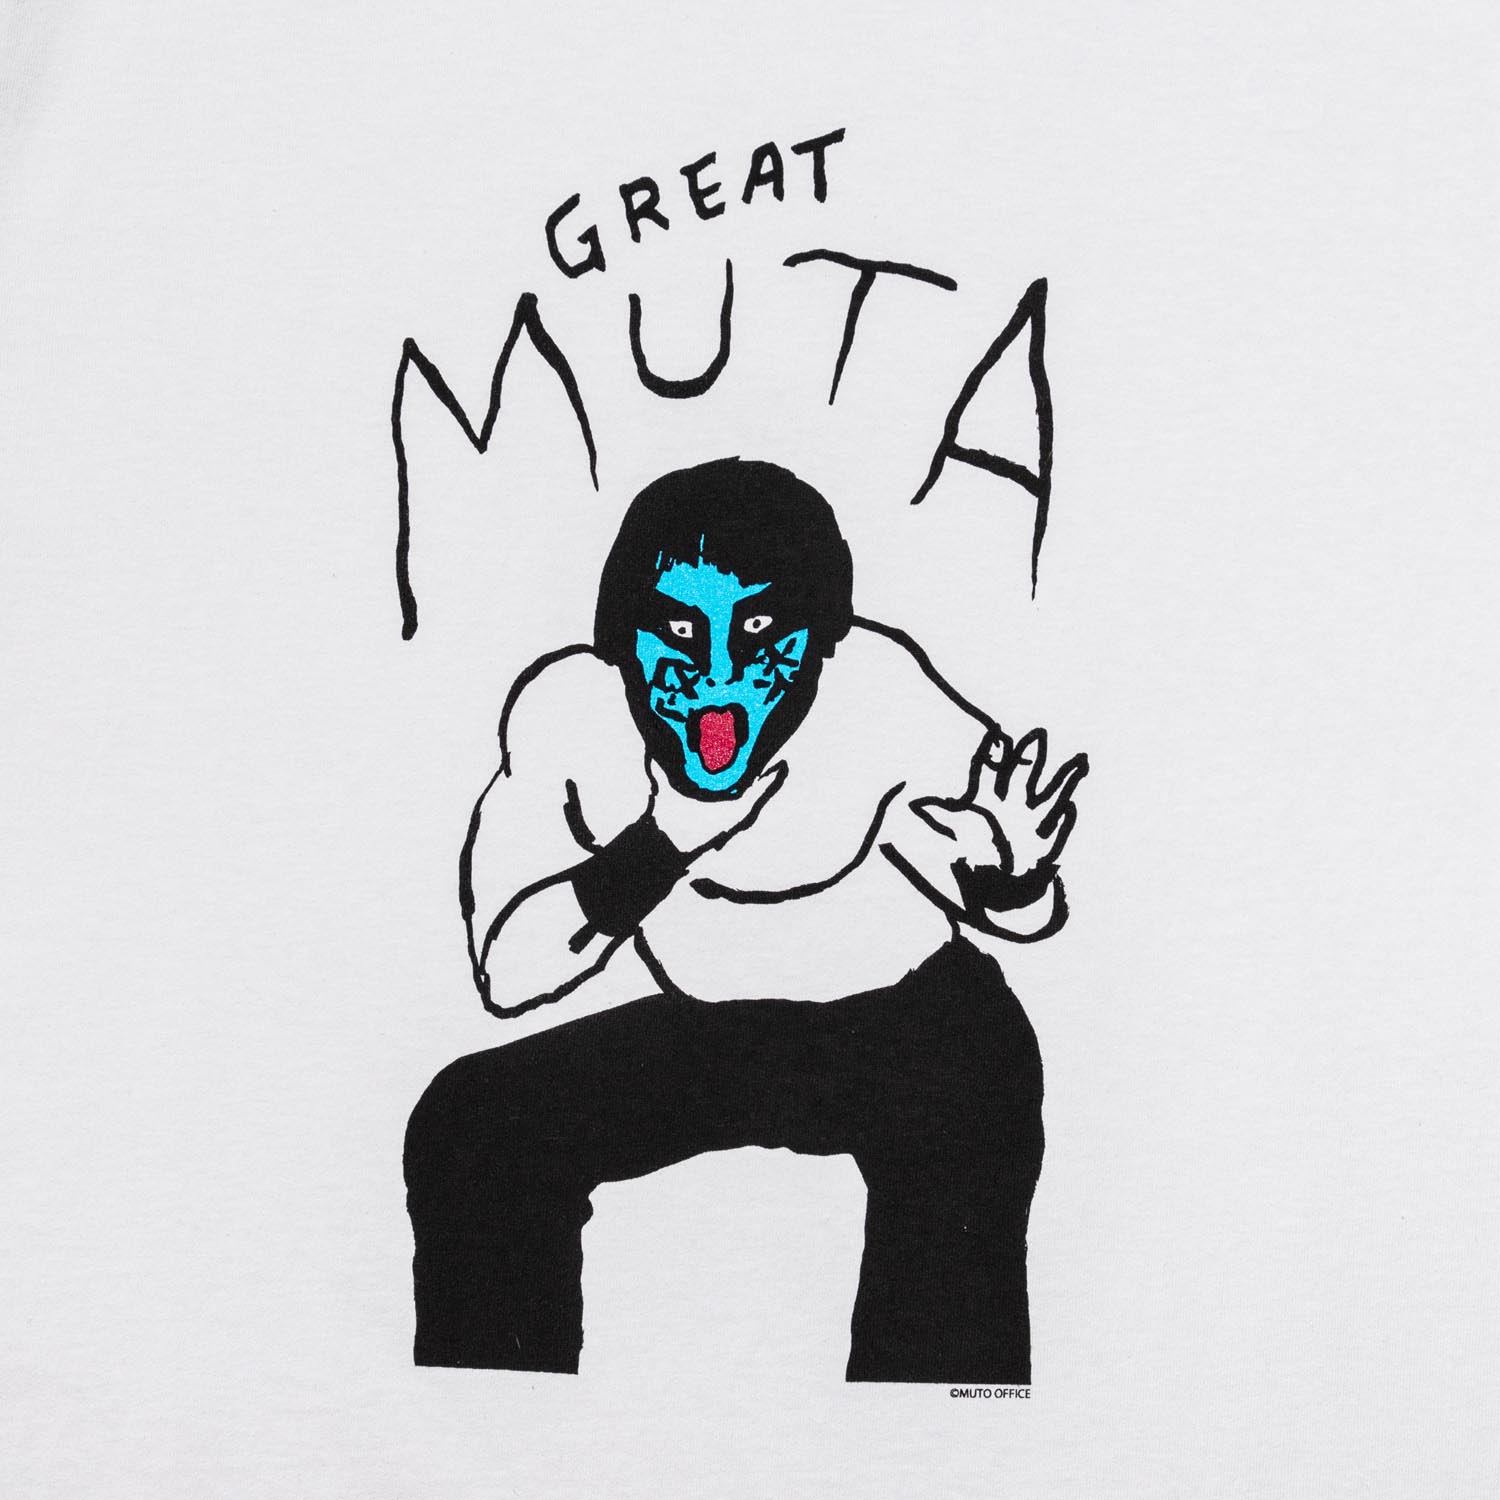 GREAT MUTA designed by Tomoo Gokita